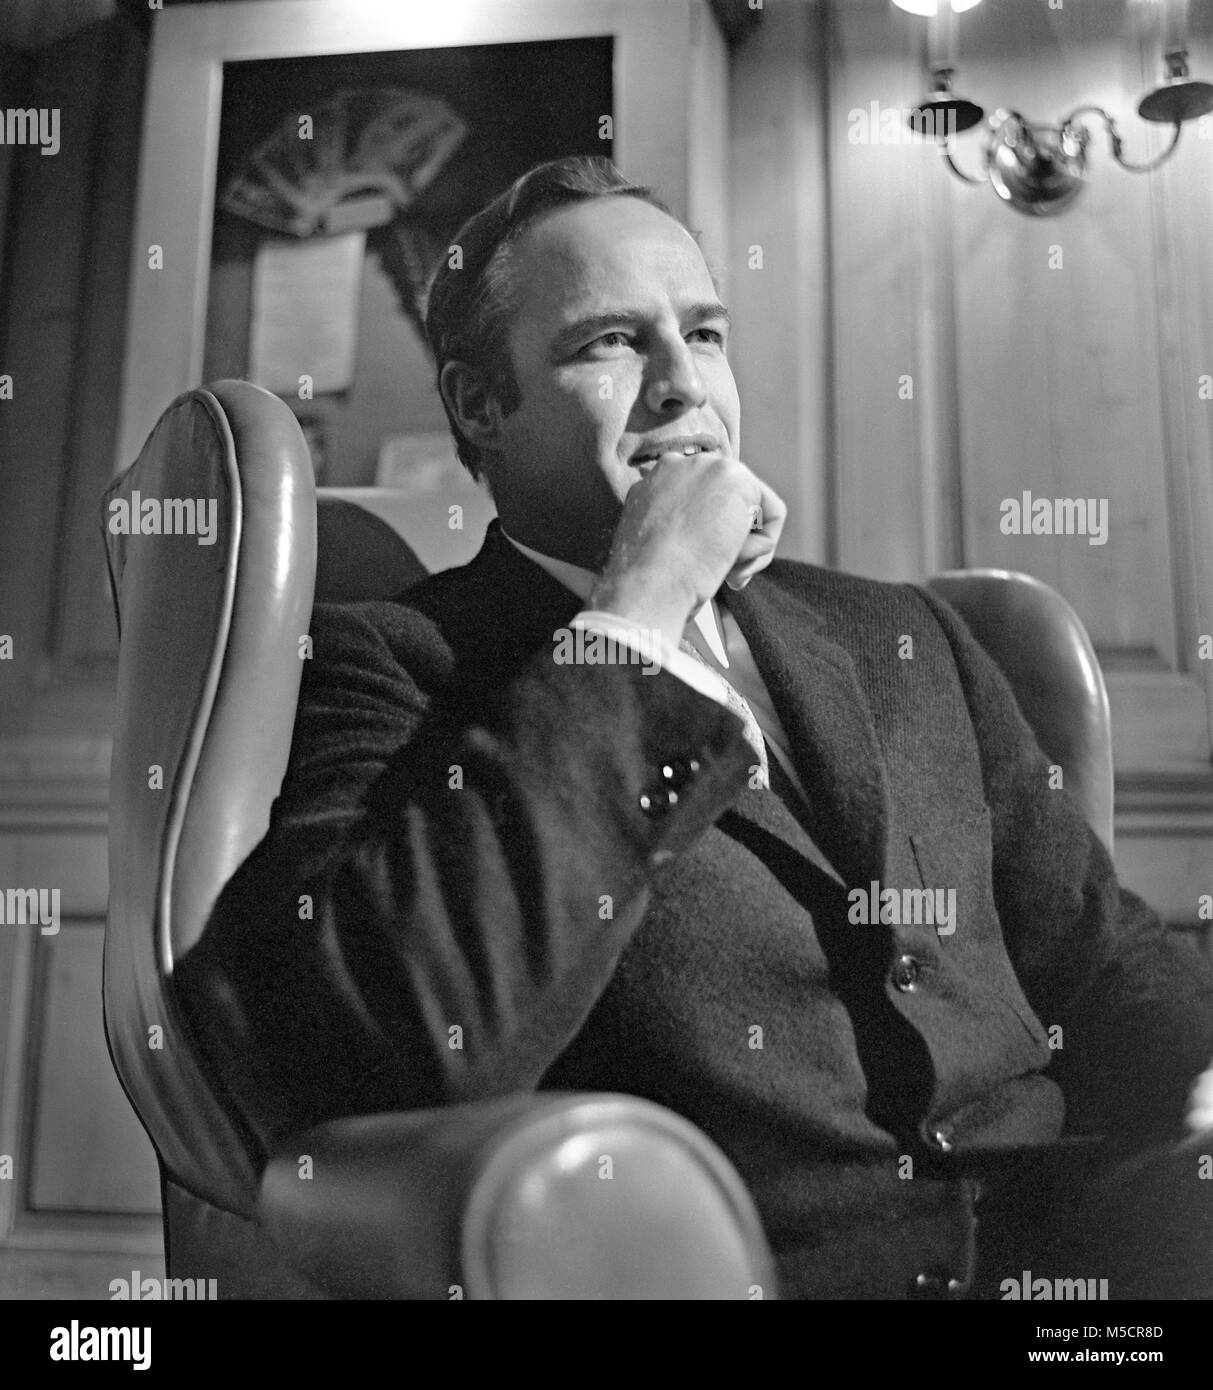 Actor Marlon Brando during a press conference in Chicago,IL.  April 12, 1963. Image from original camera negative. Stock Photo